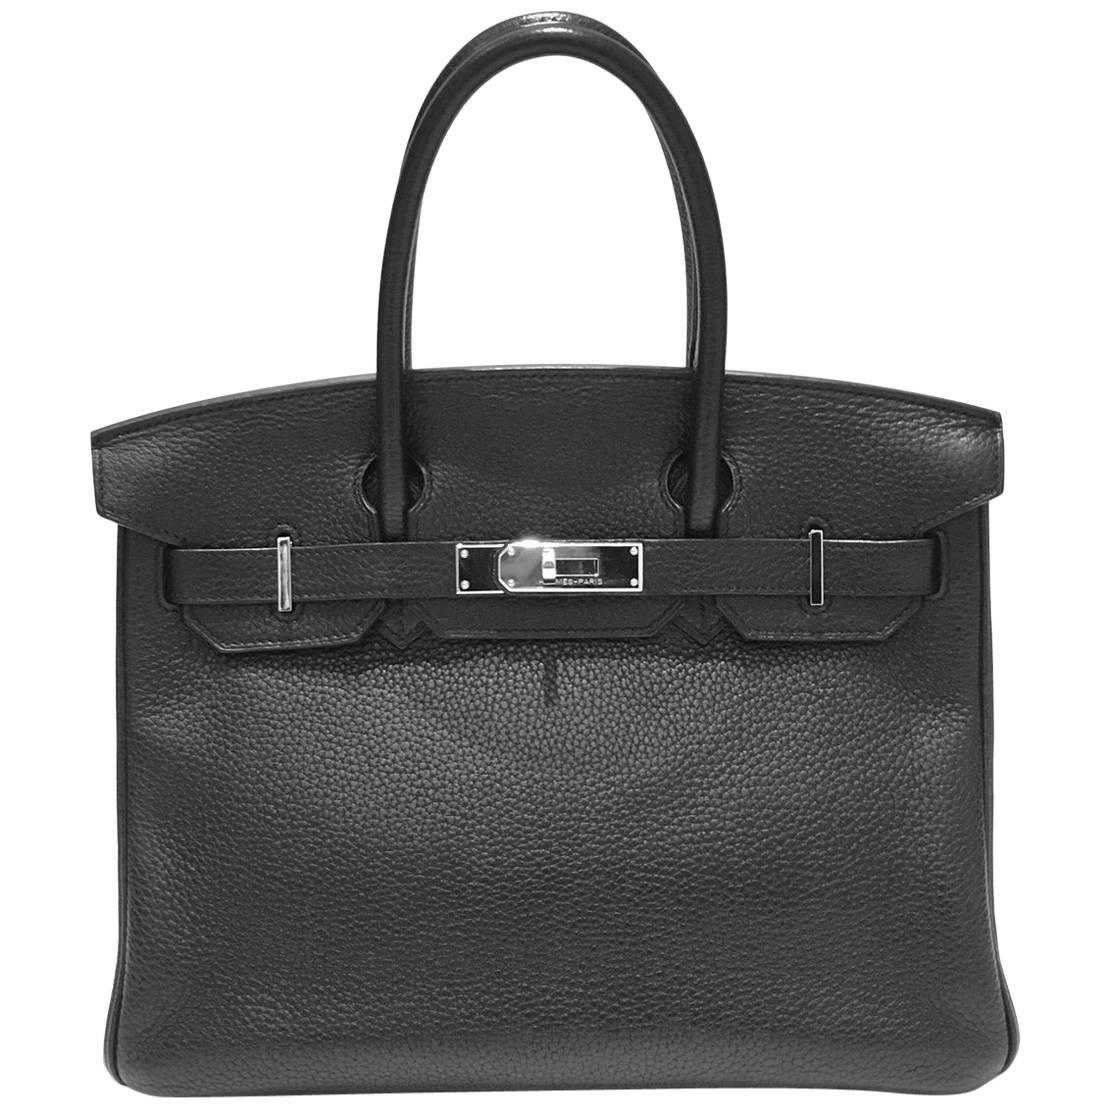 Hermes Paris Birkin 30 Black Taurillon Clemance Leather Bag, 2009